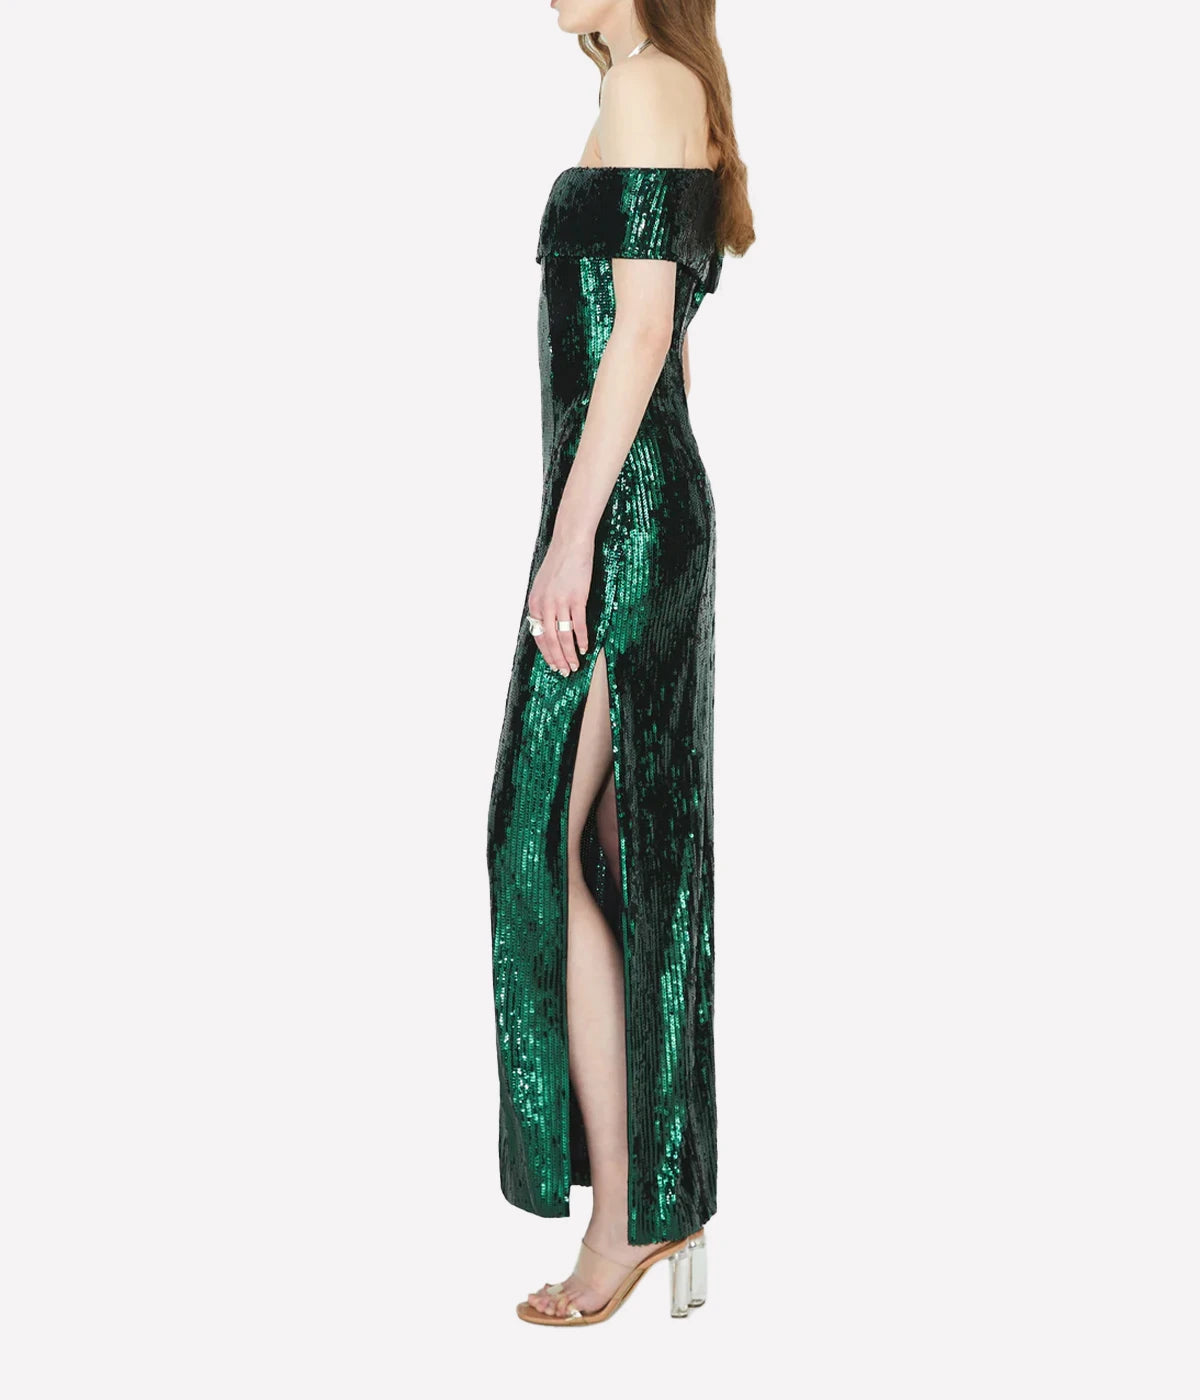 Sequin Glencoe Dress in Emerald